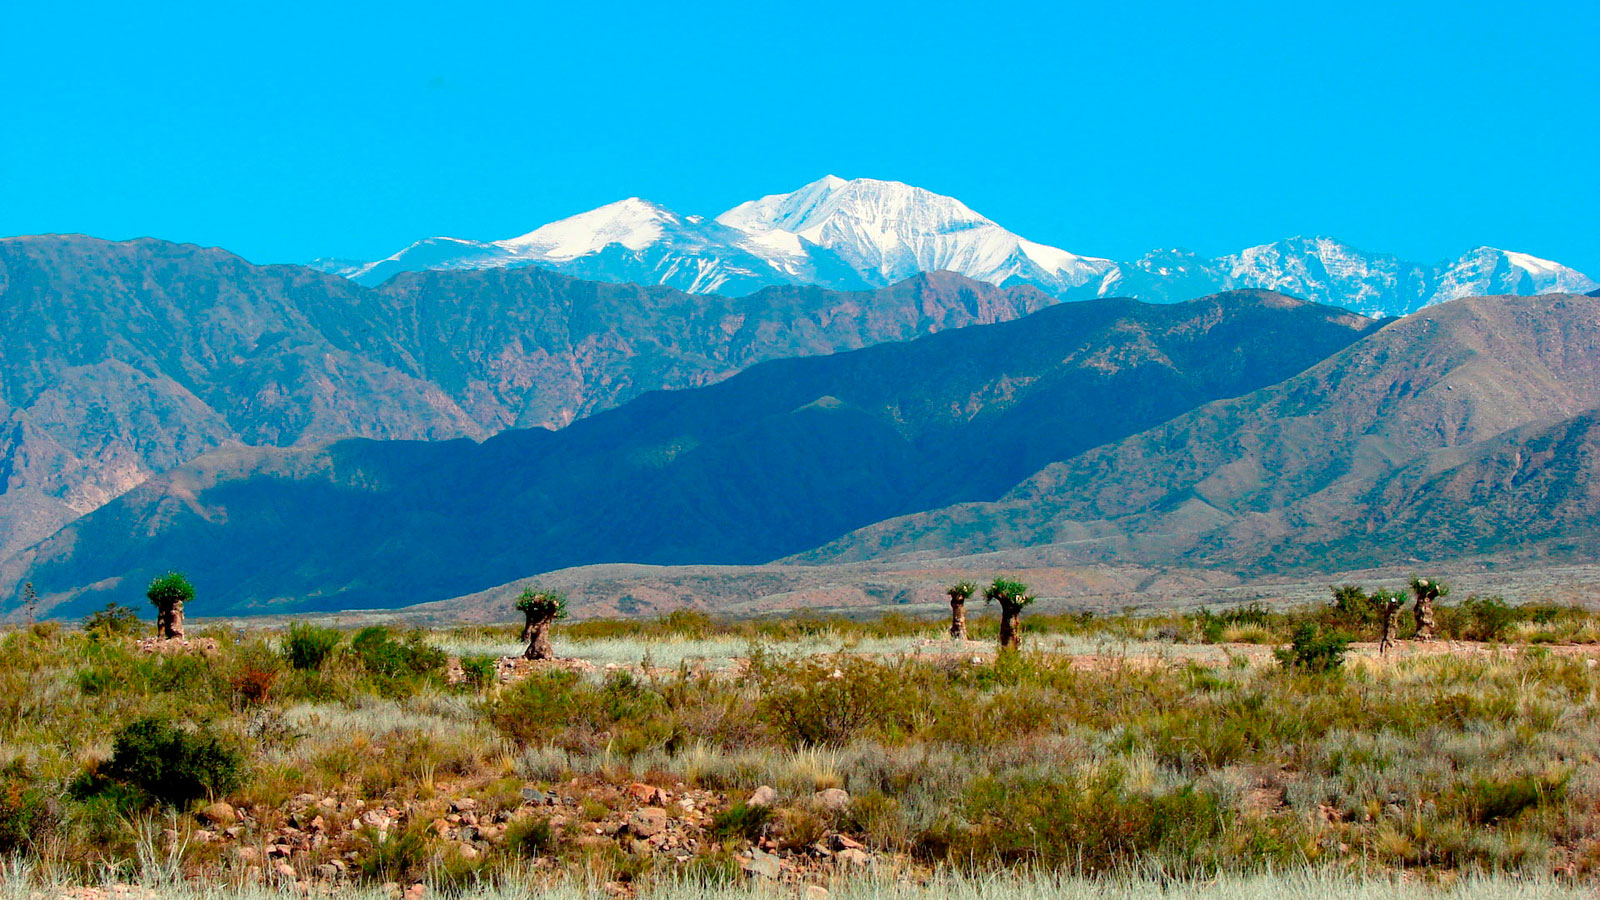 Landscape in the province of Mendoza - Argentina